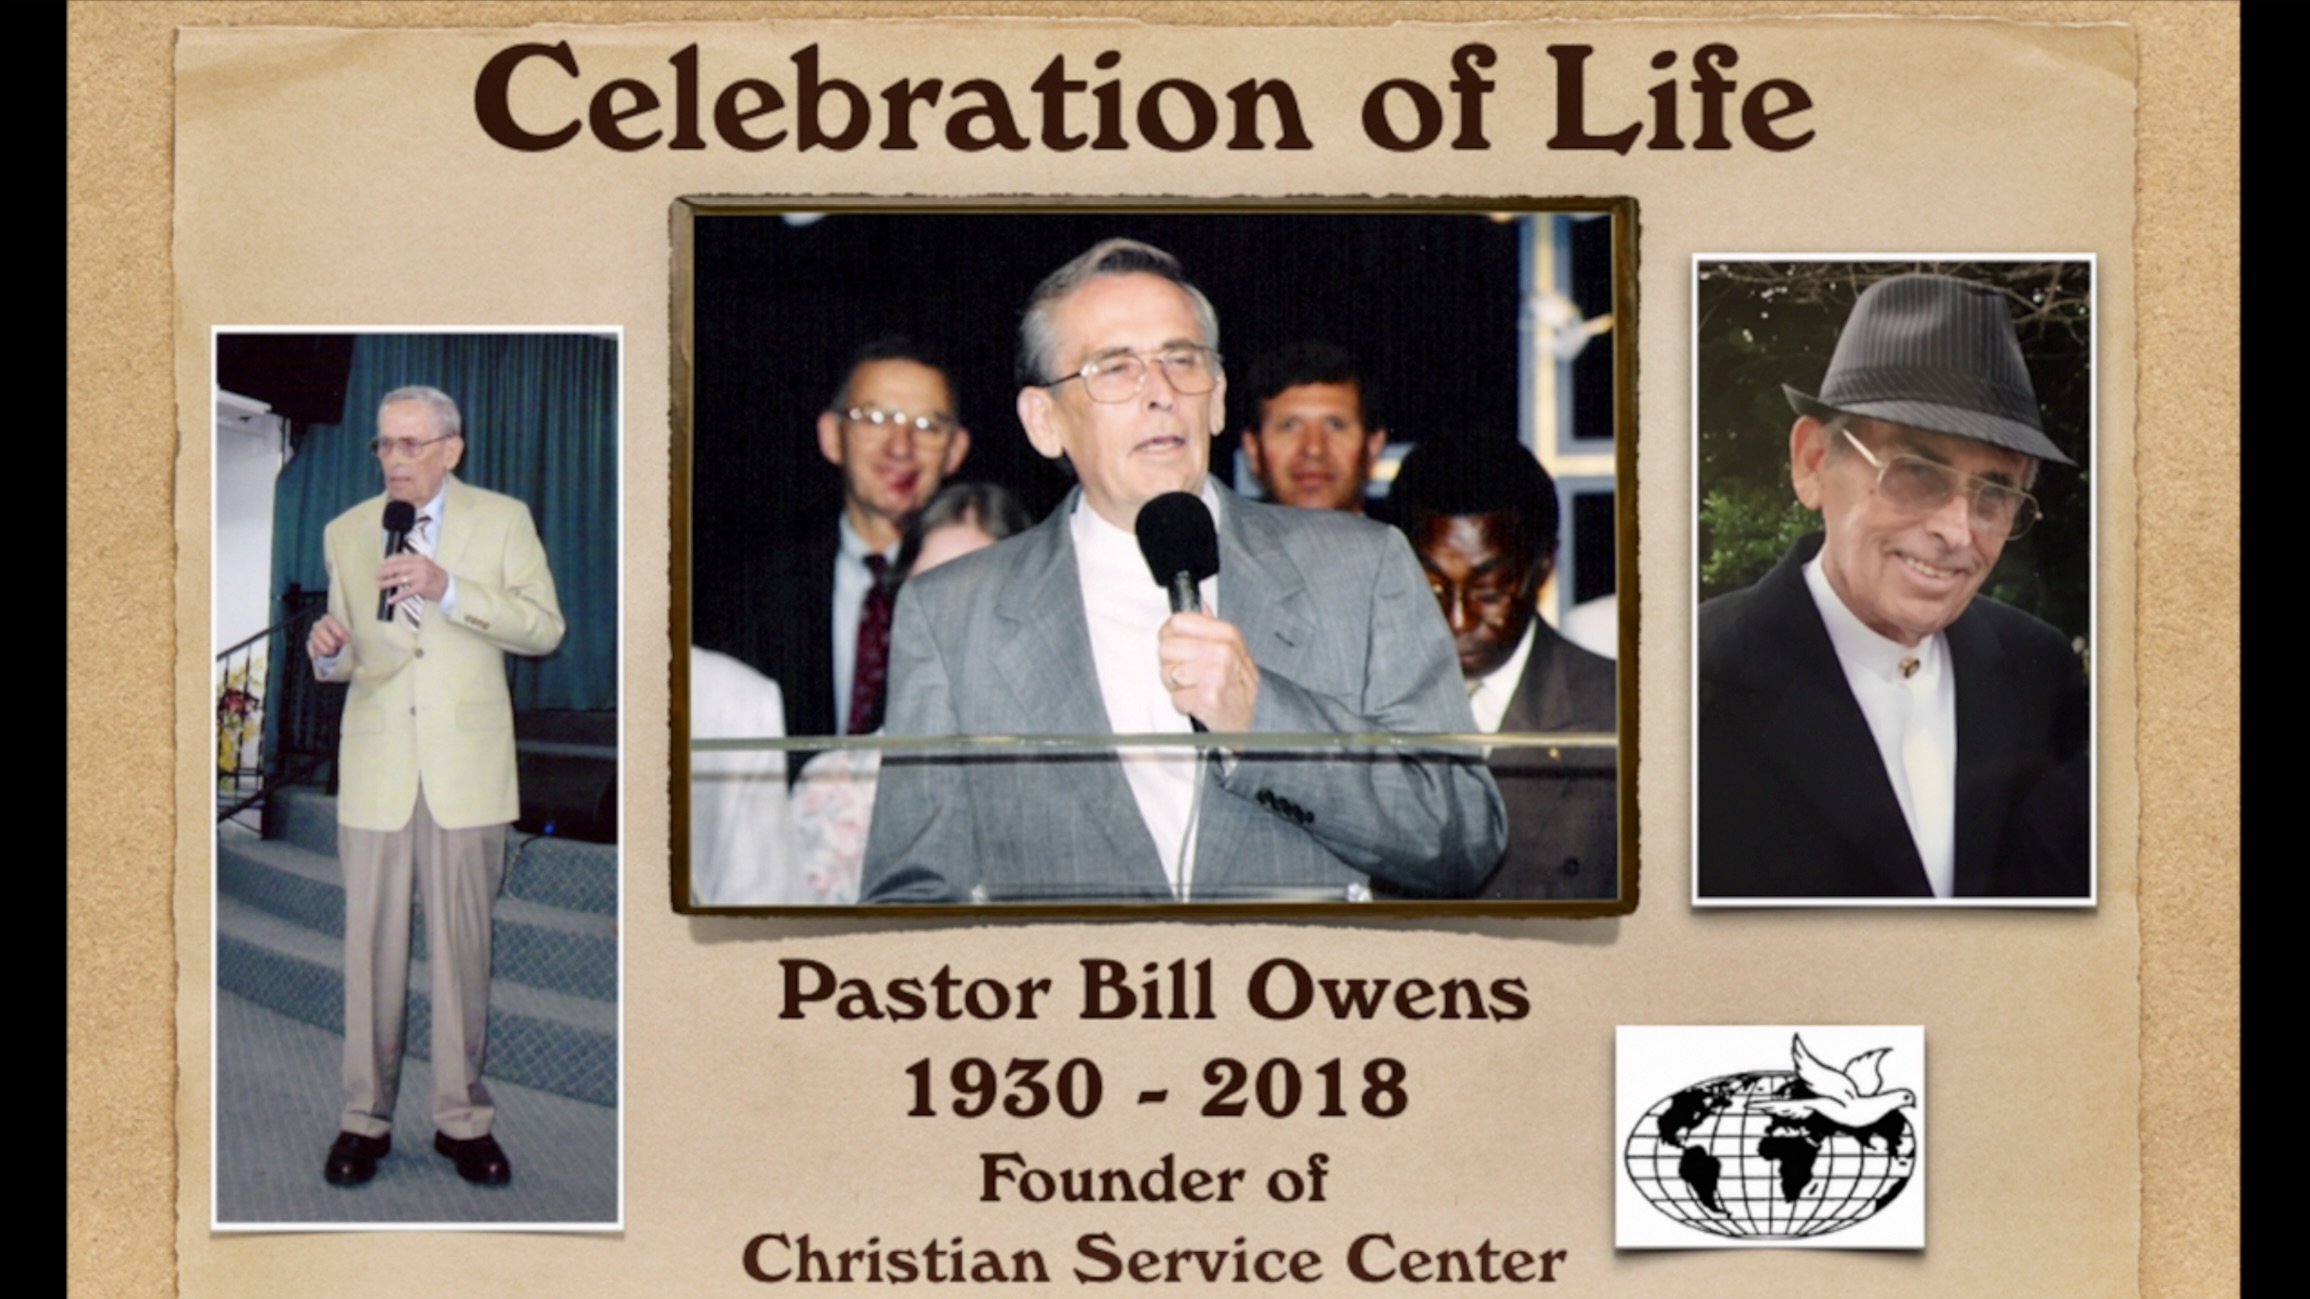 Celebration of Life - Pastor Bill Owens